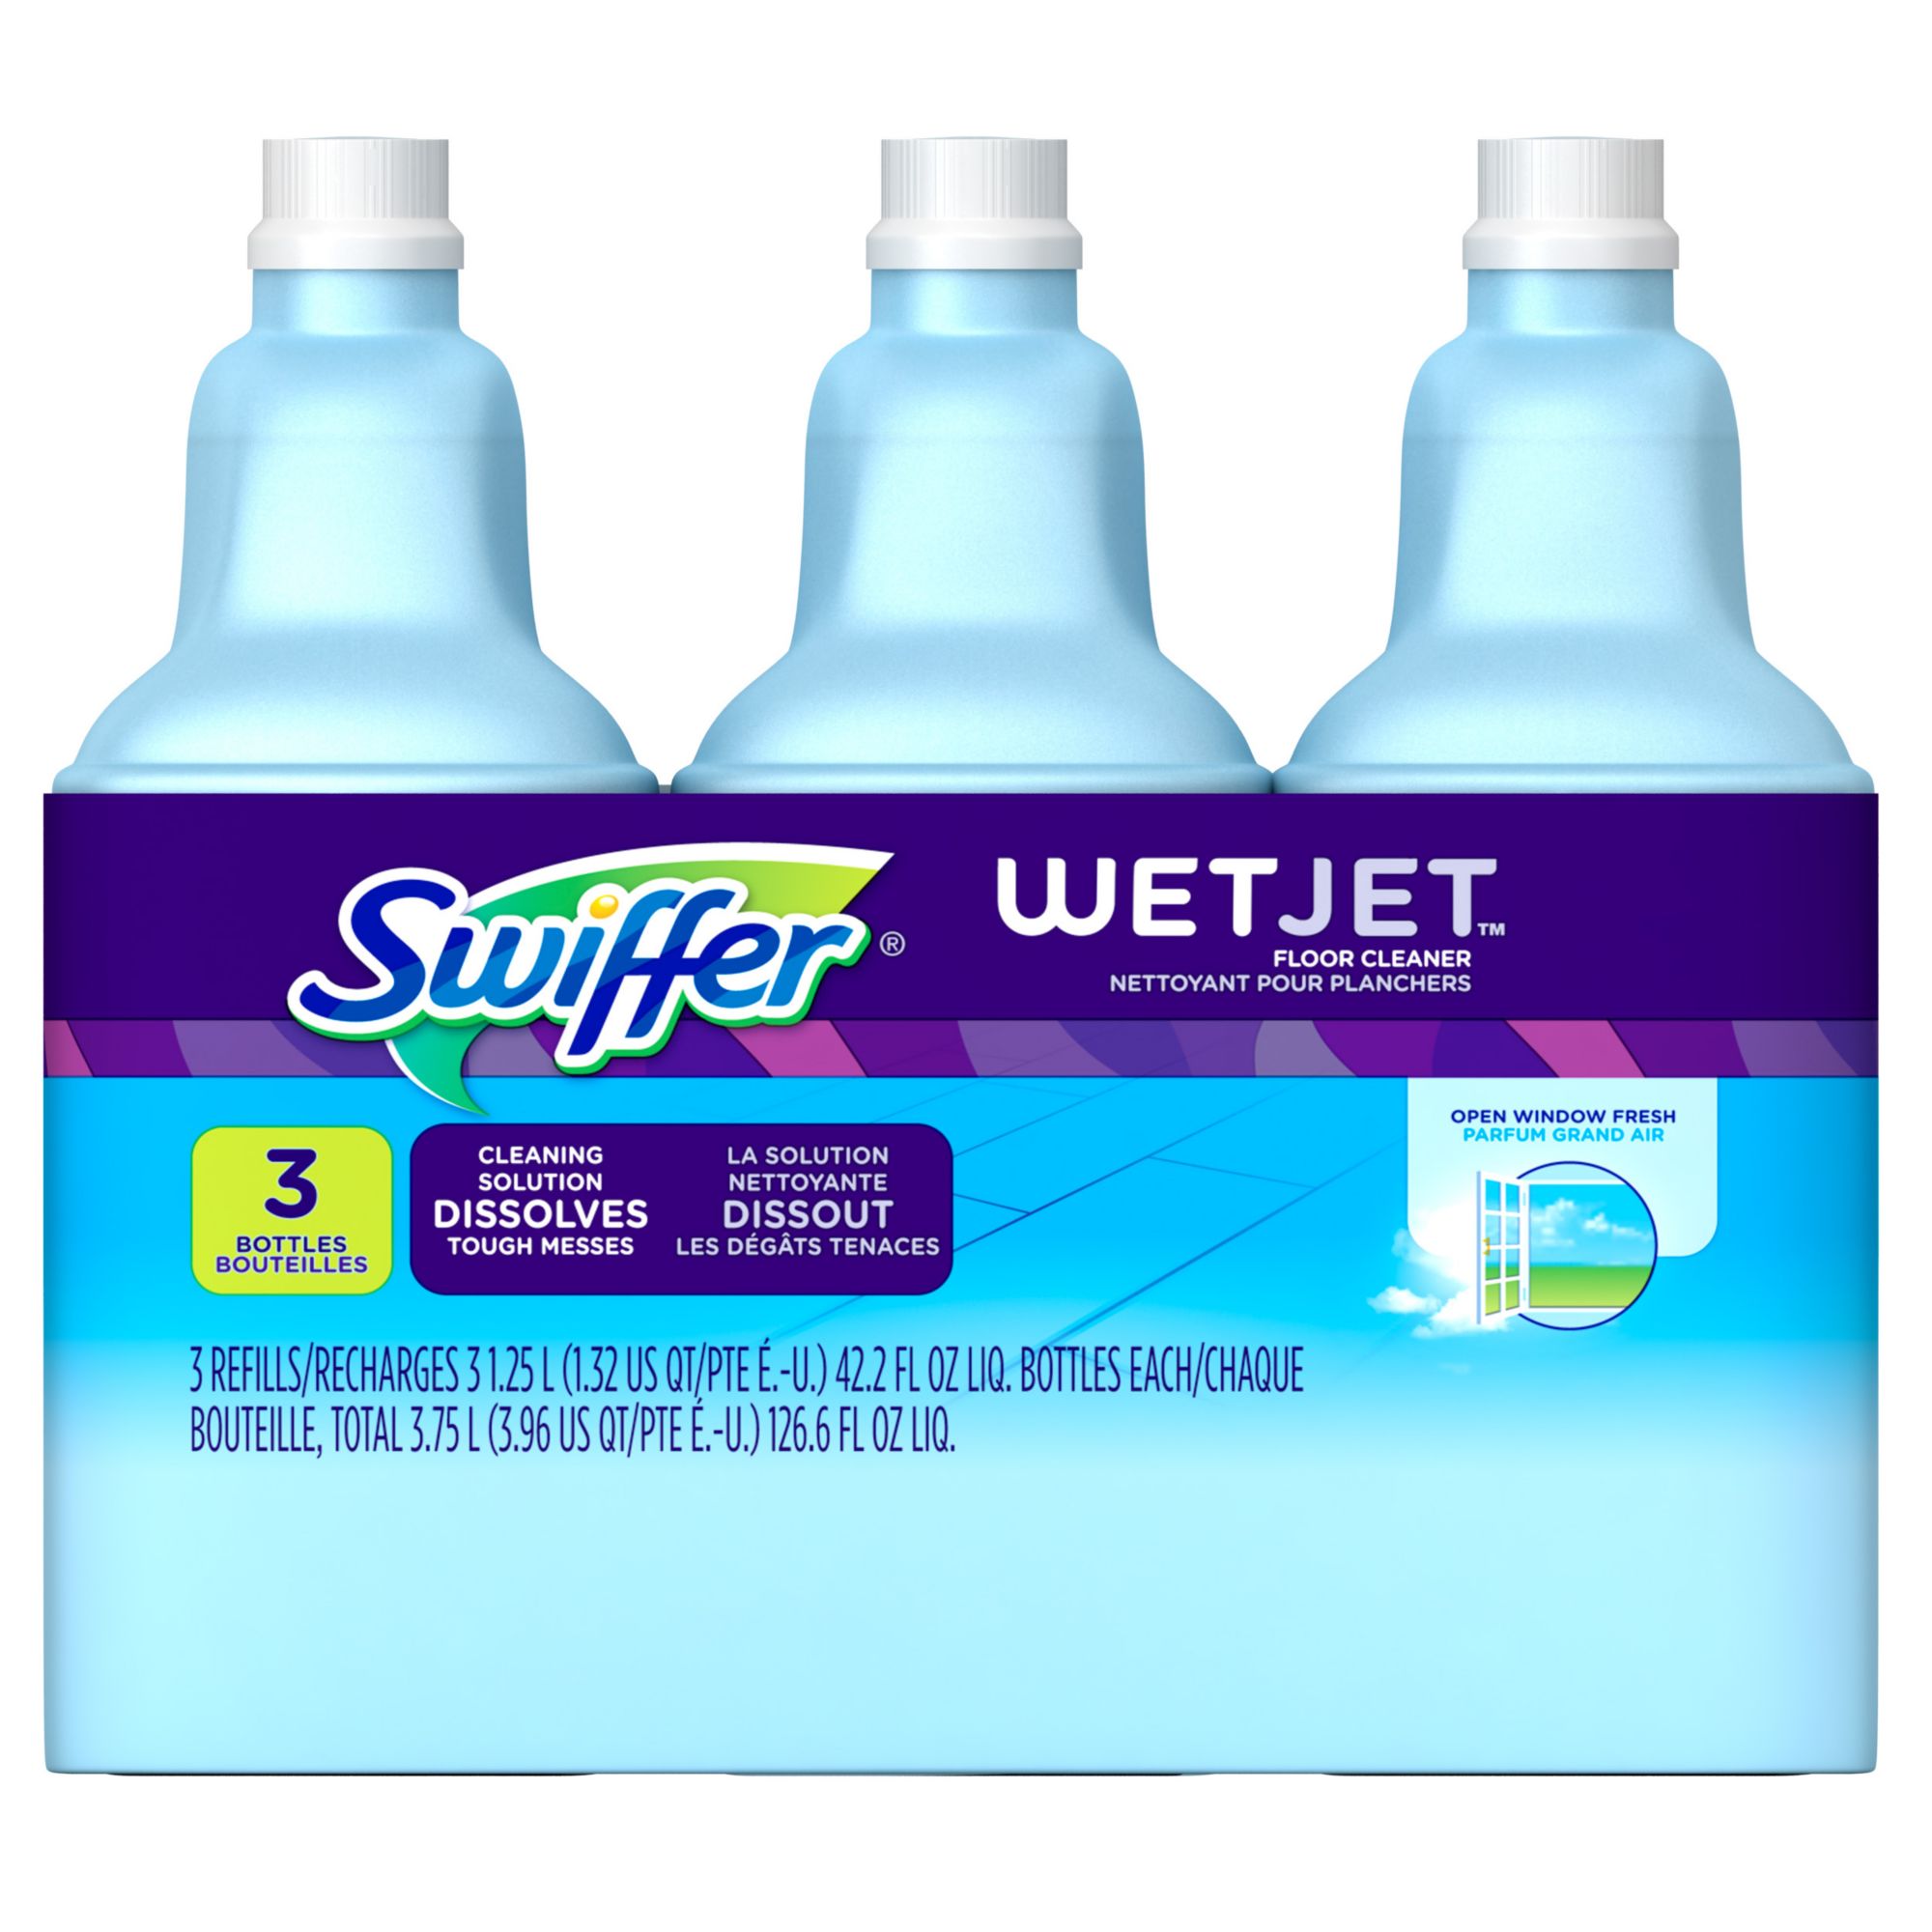 Swiffer WetJet Multi-Purpose Cleaner Solution with Febreze